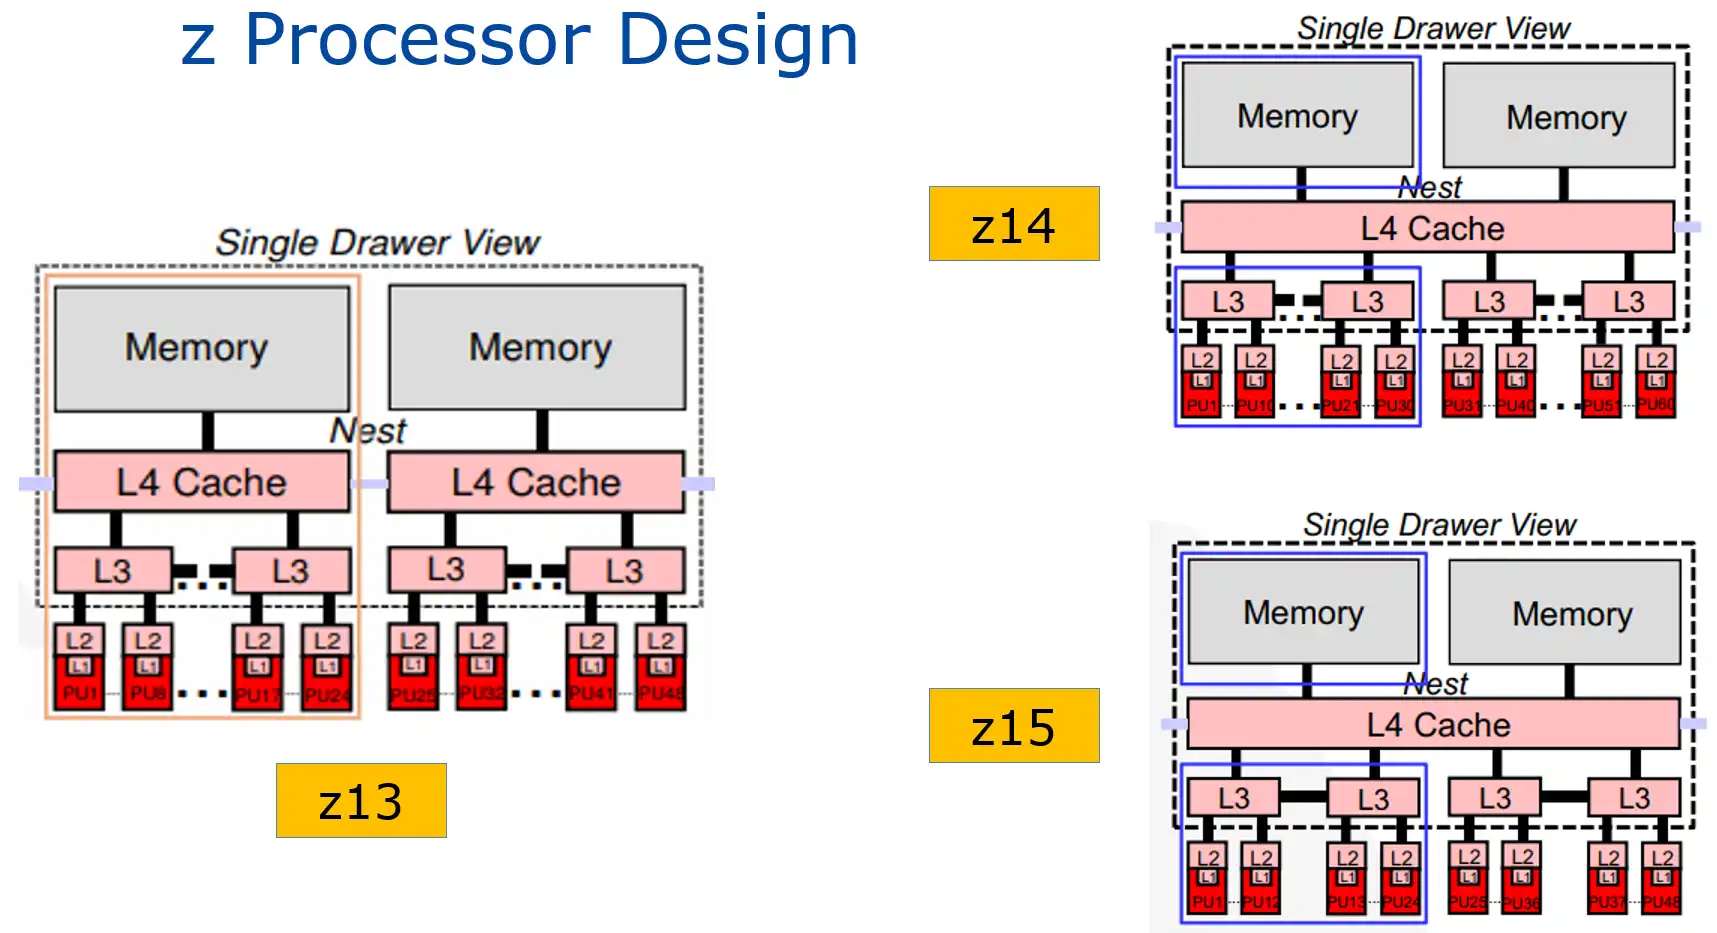 Figure 1: z Processor Design (IBM)